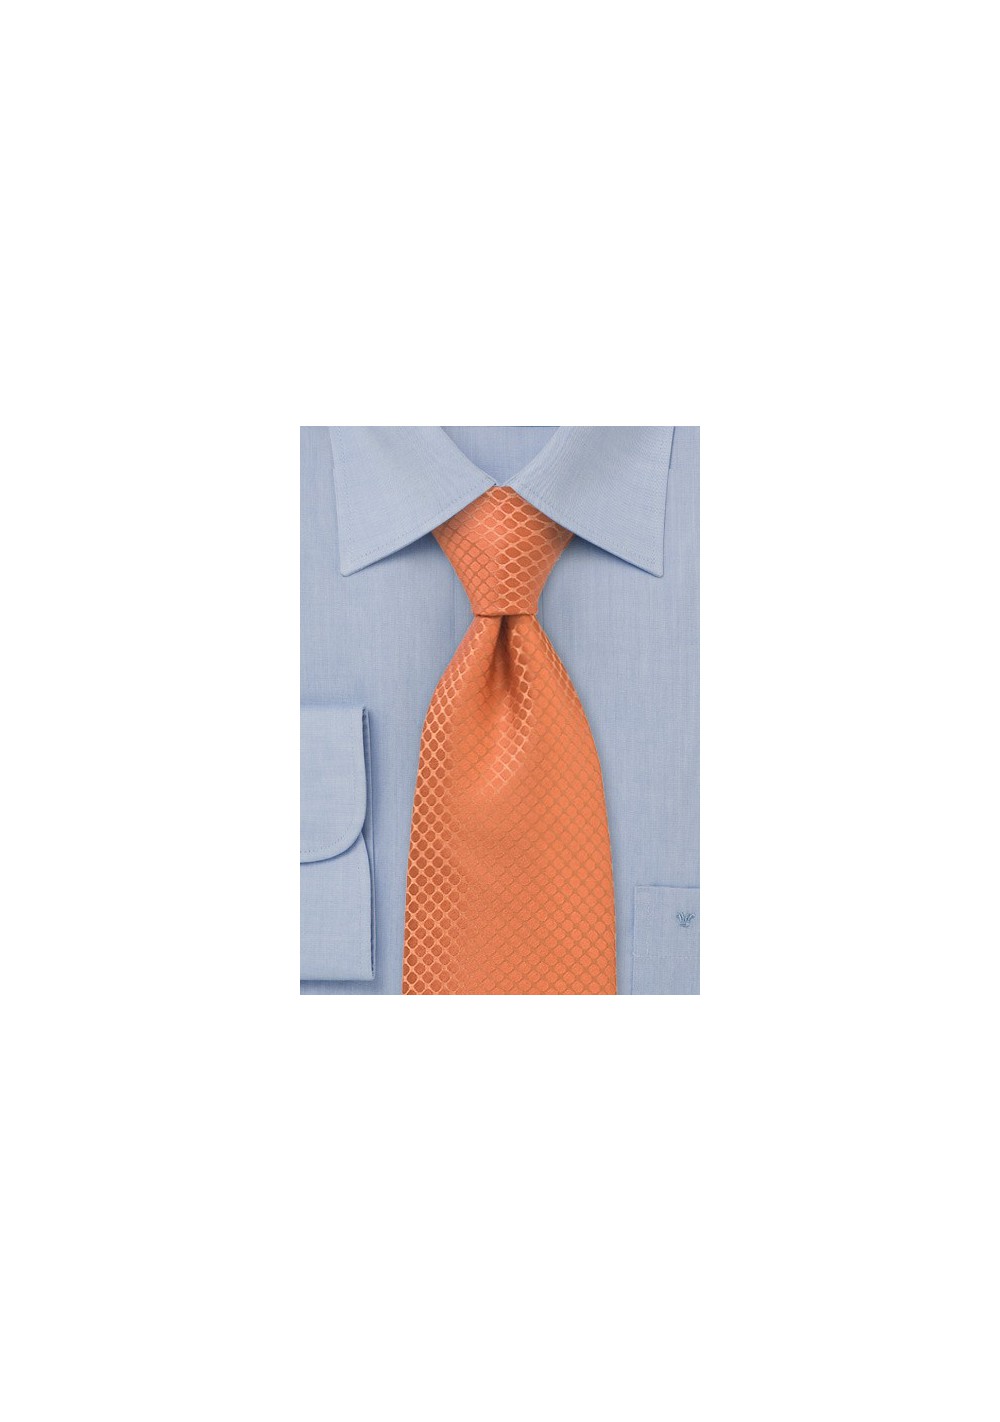 Trendy Orange Silk Tie for Kids